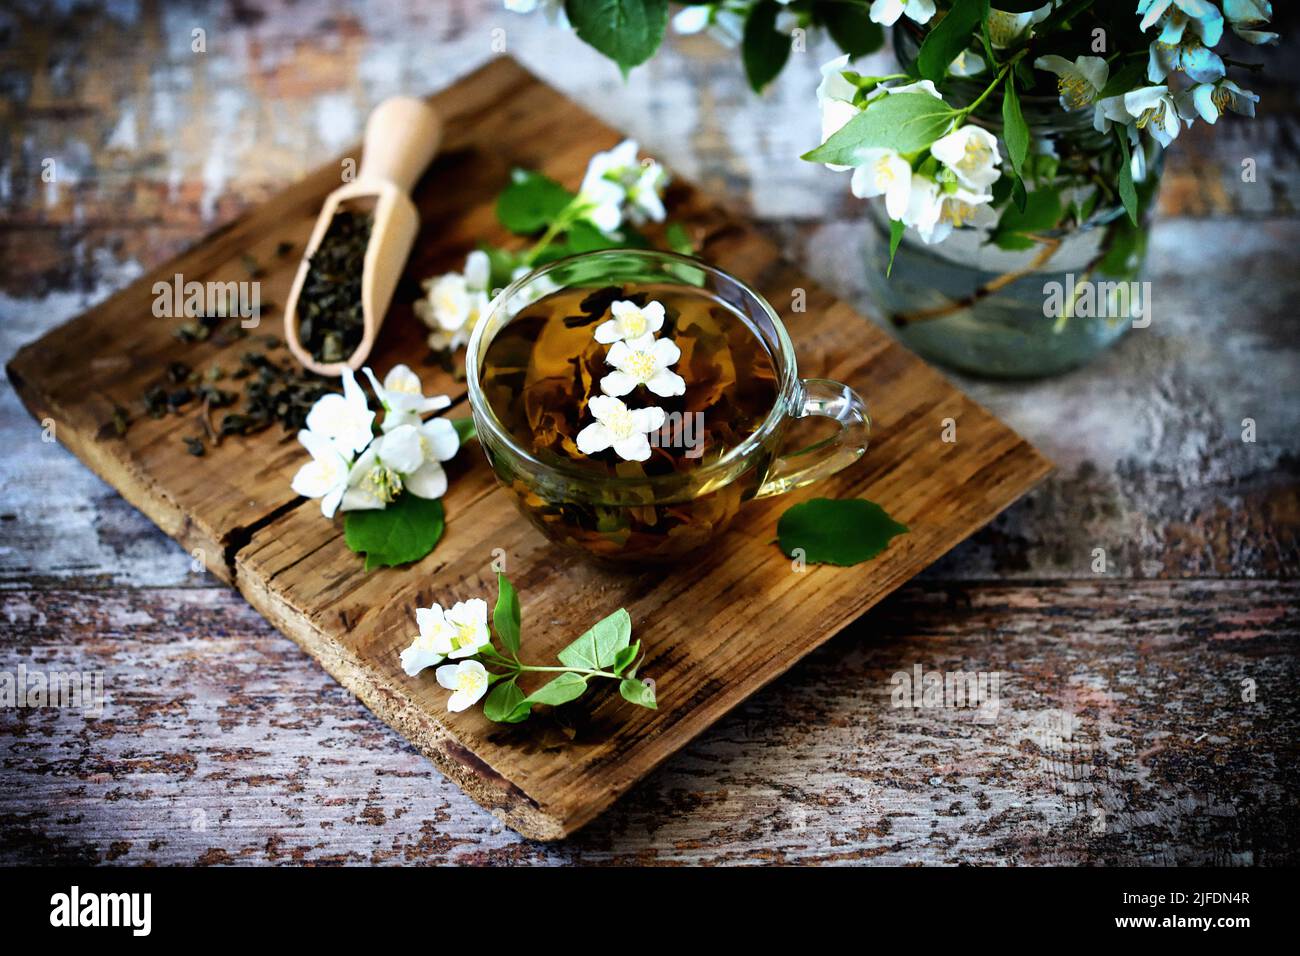 jasmine green tea in a cup. Jasmine flowers, dry tea on a wooden surface. Stock Photo